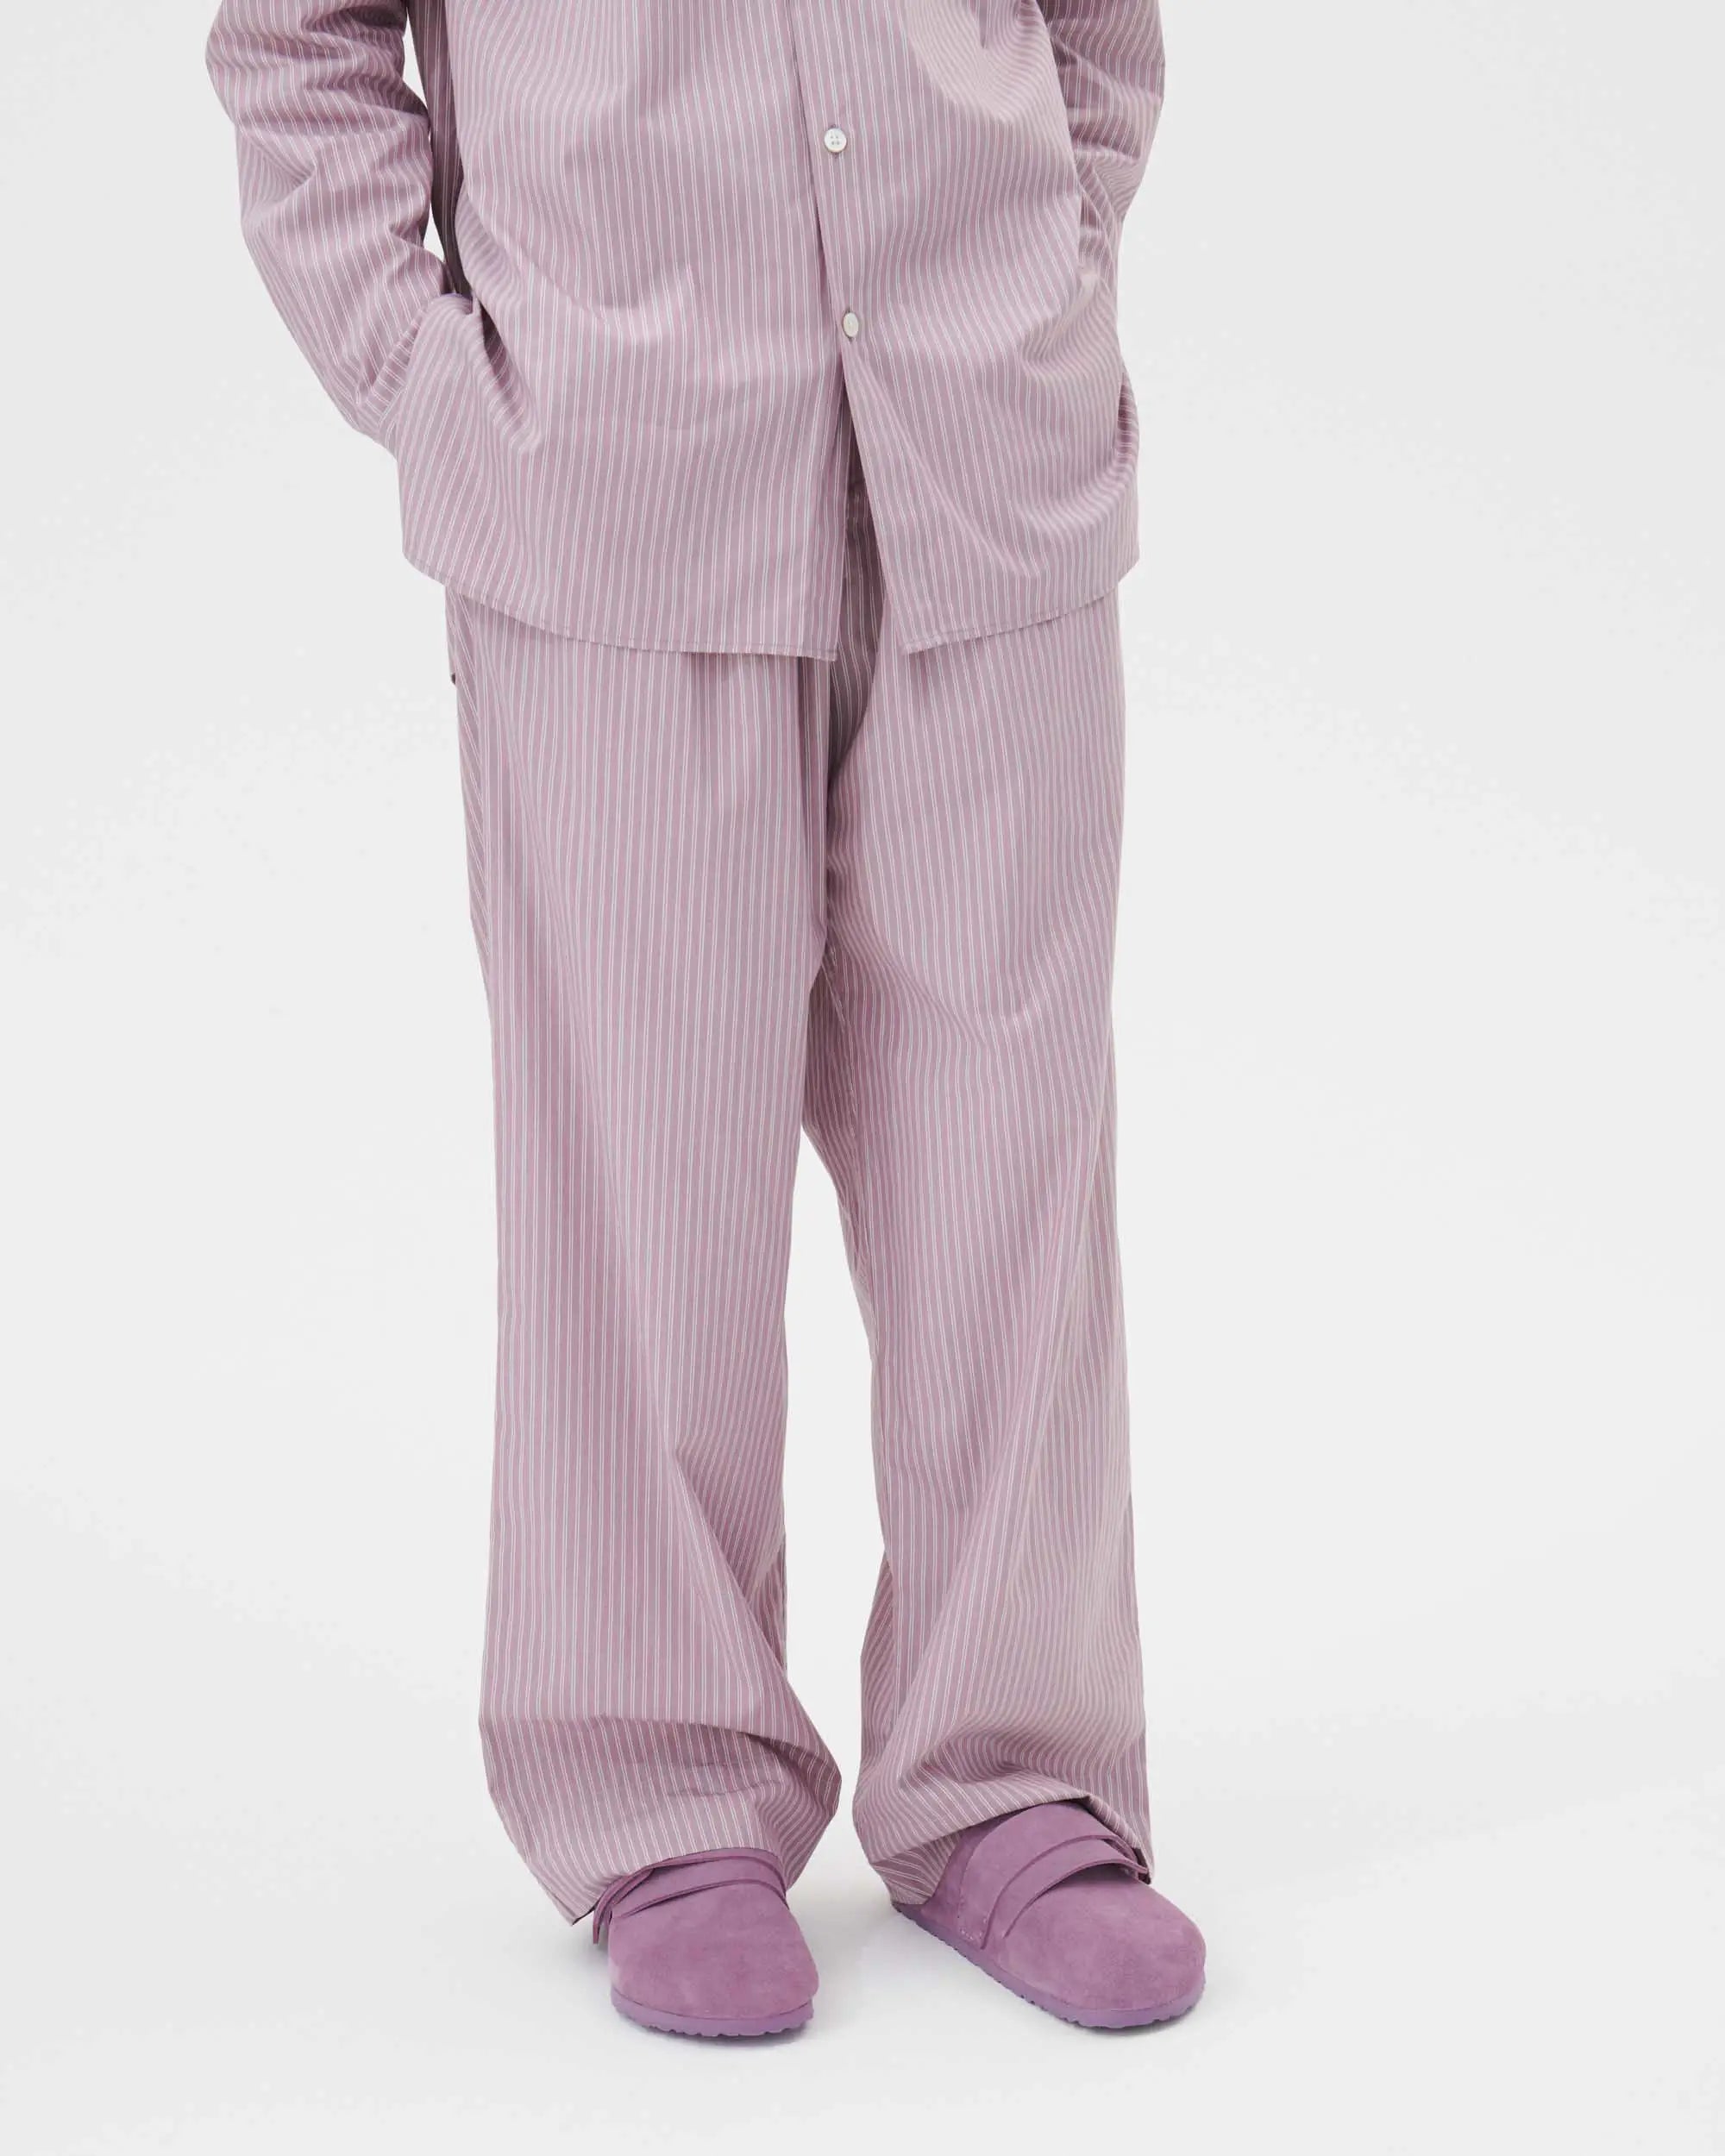 Tekla X Birkenstock Shirt & Pants Set - Mauve Stripes